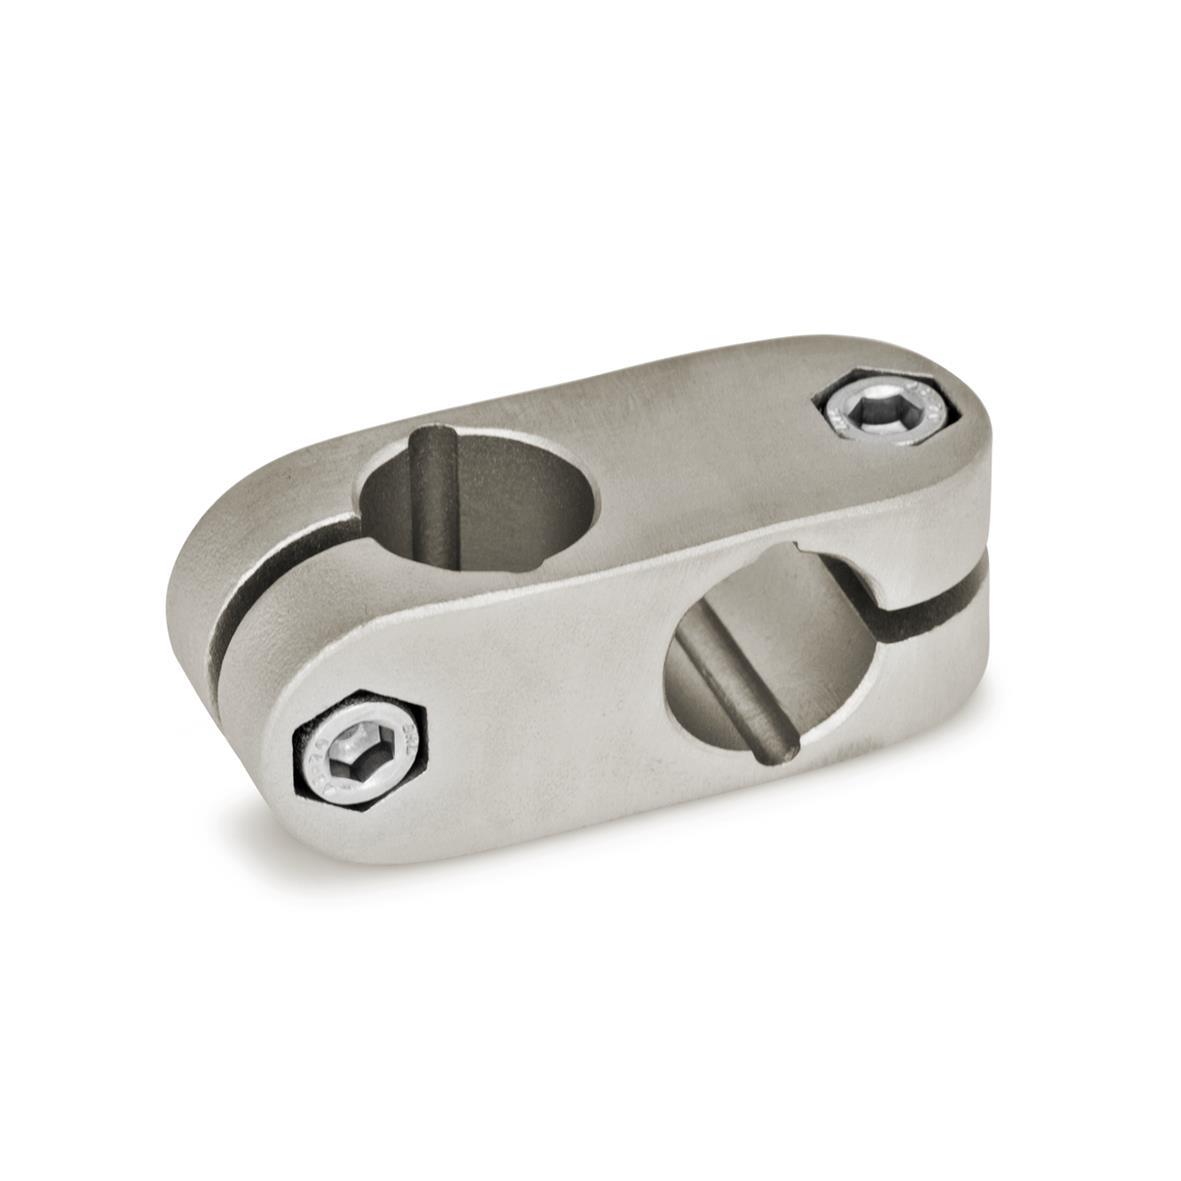 Aluminium Profiles Accessories and Fittings Slide Hook / Tool